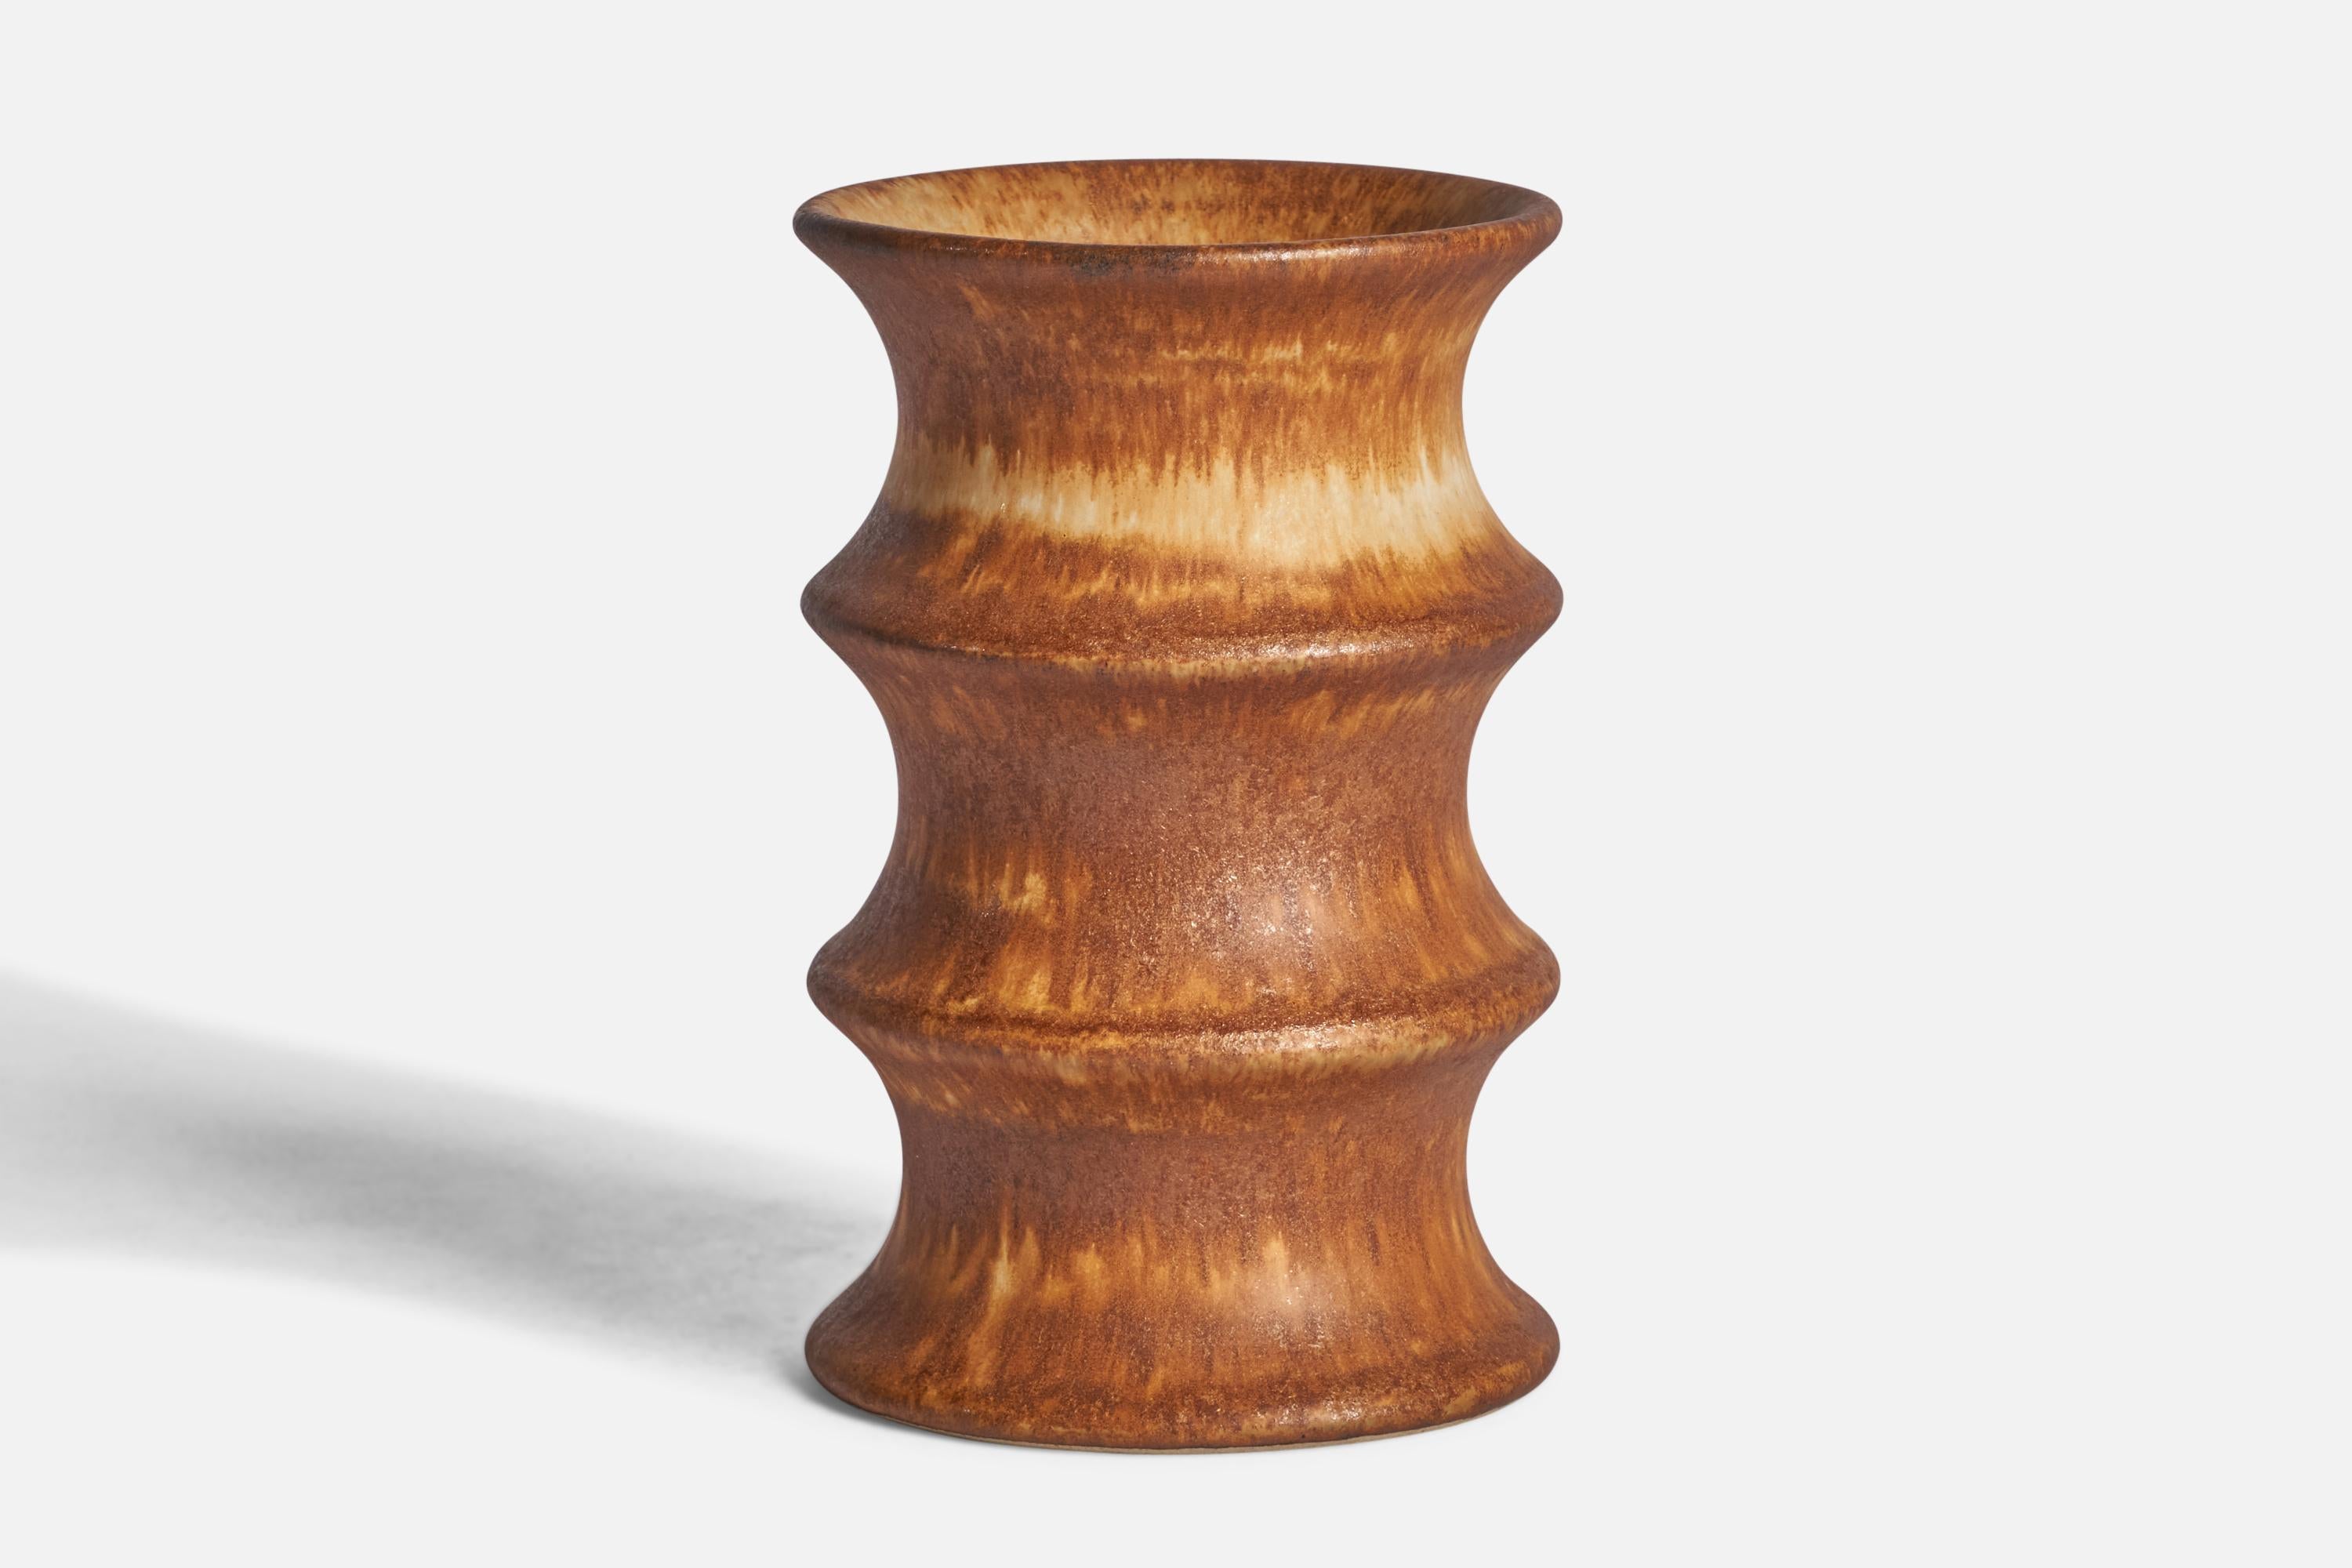 A brown-glazed stoneware vase designed by Bruno Karlsson and produced by Ego Stengods, Sweden, c. 1960s.

“EGO STENGODS ATELJE” on bottom